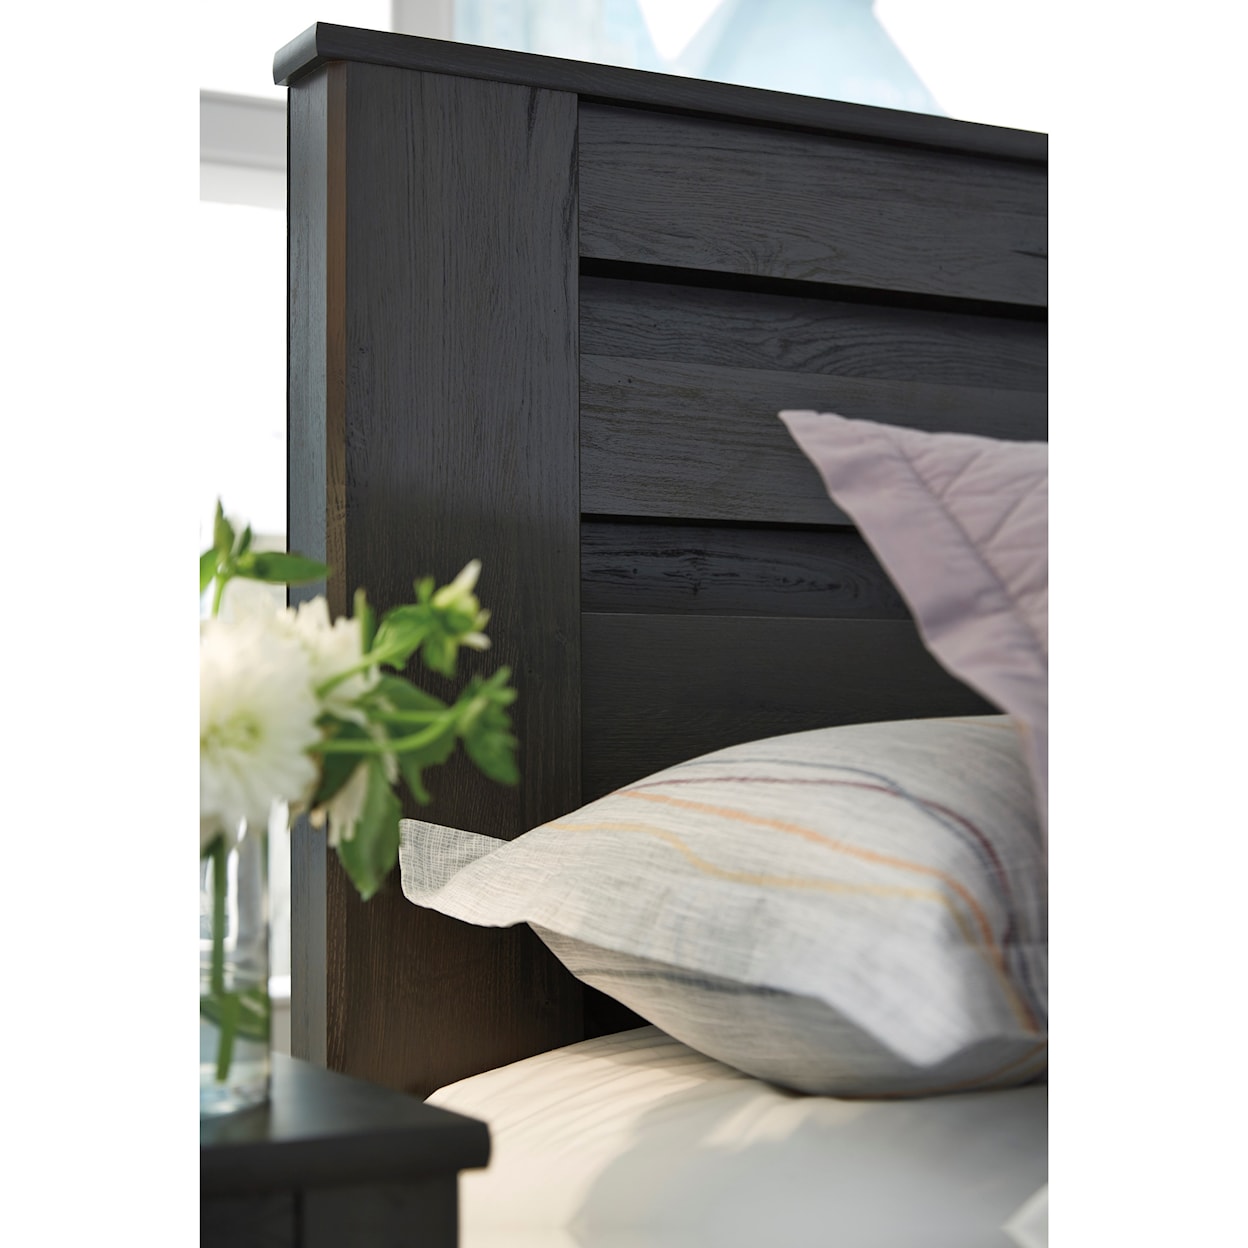 Ashley Furniture Signature Design Brinxton Queen/Full Panel Headboard